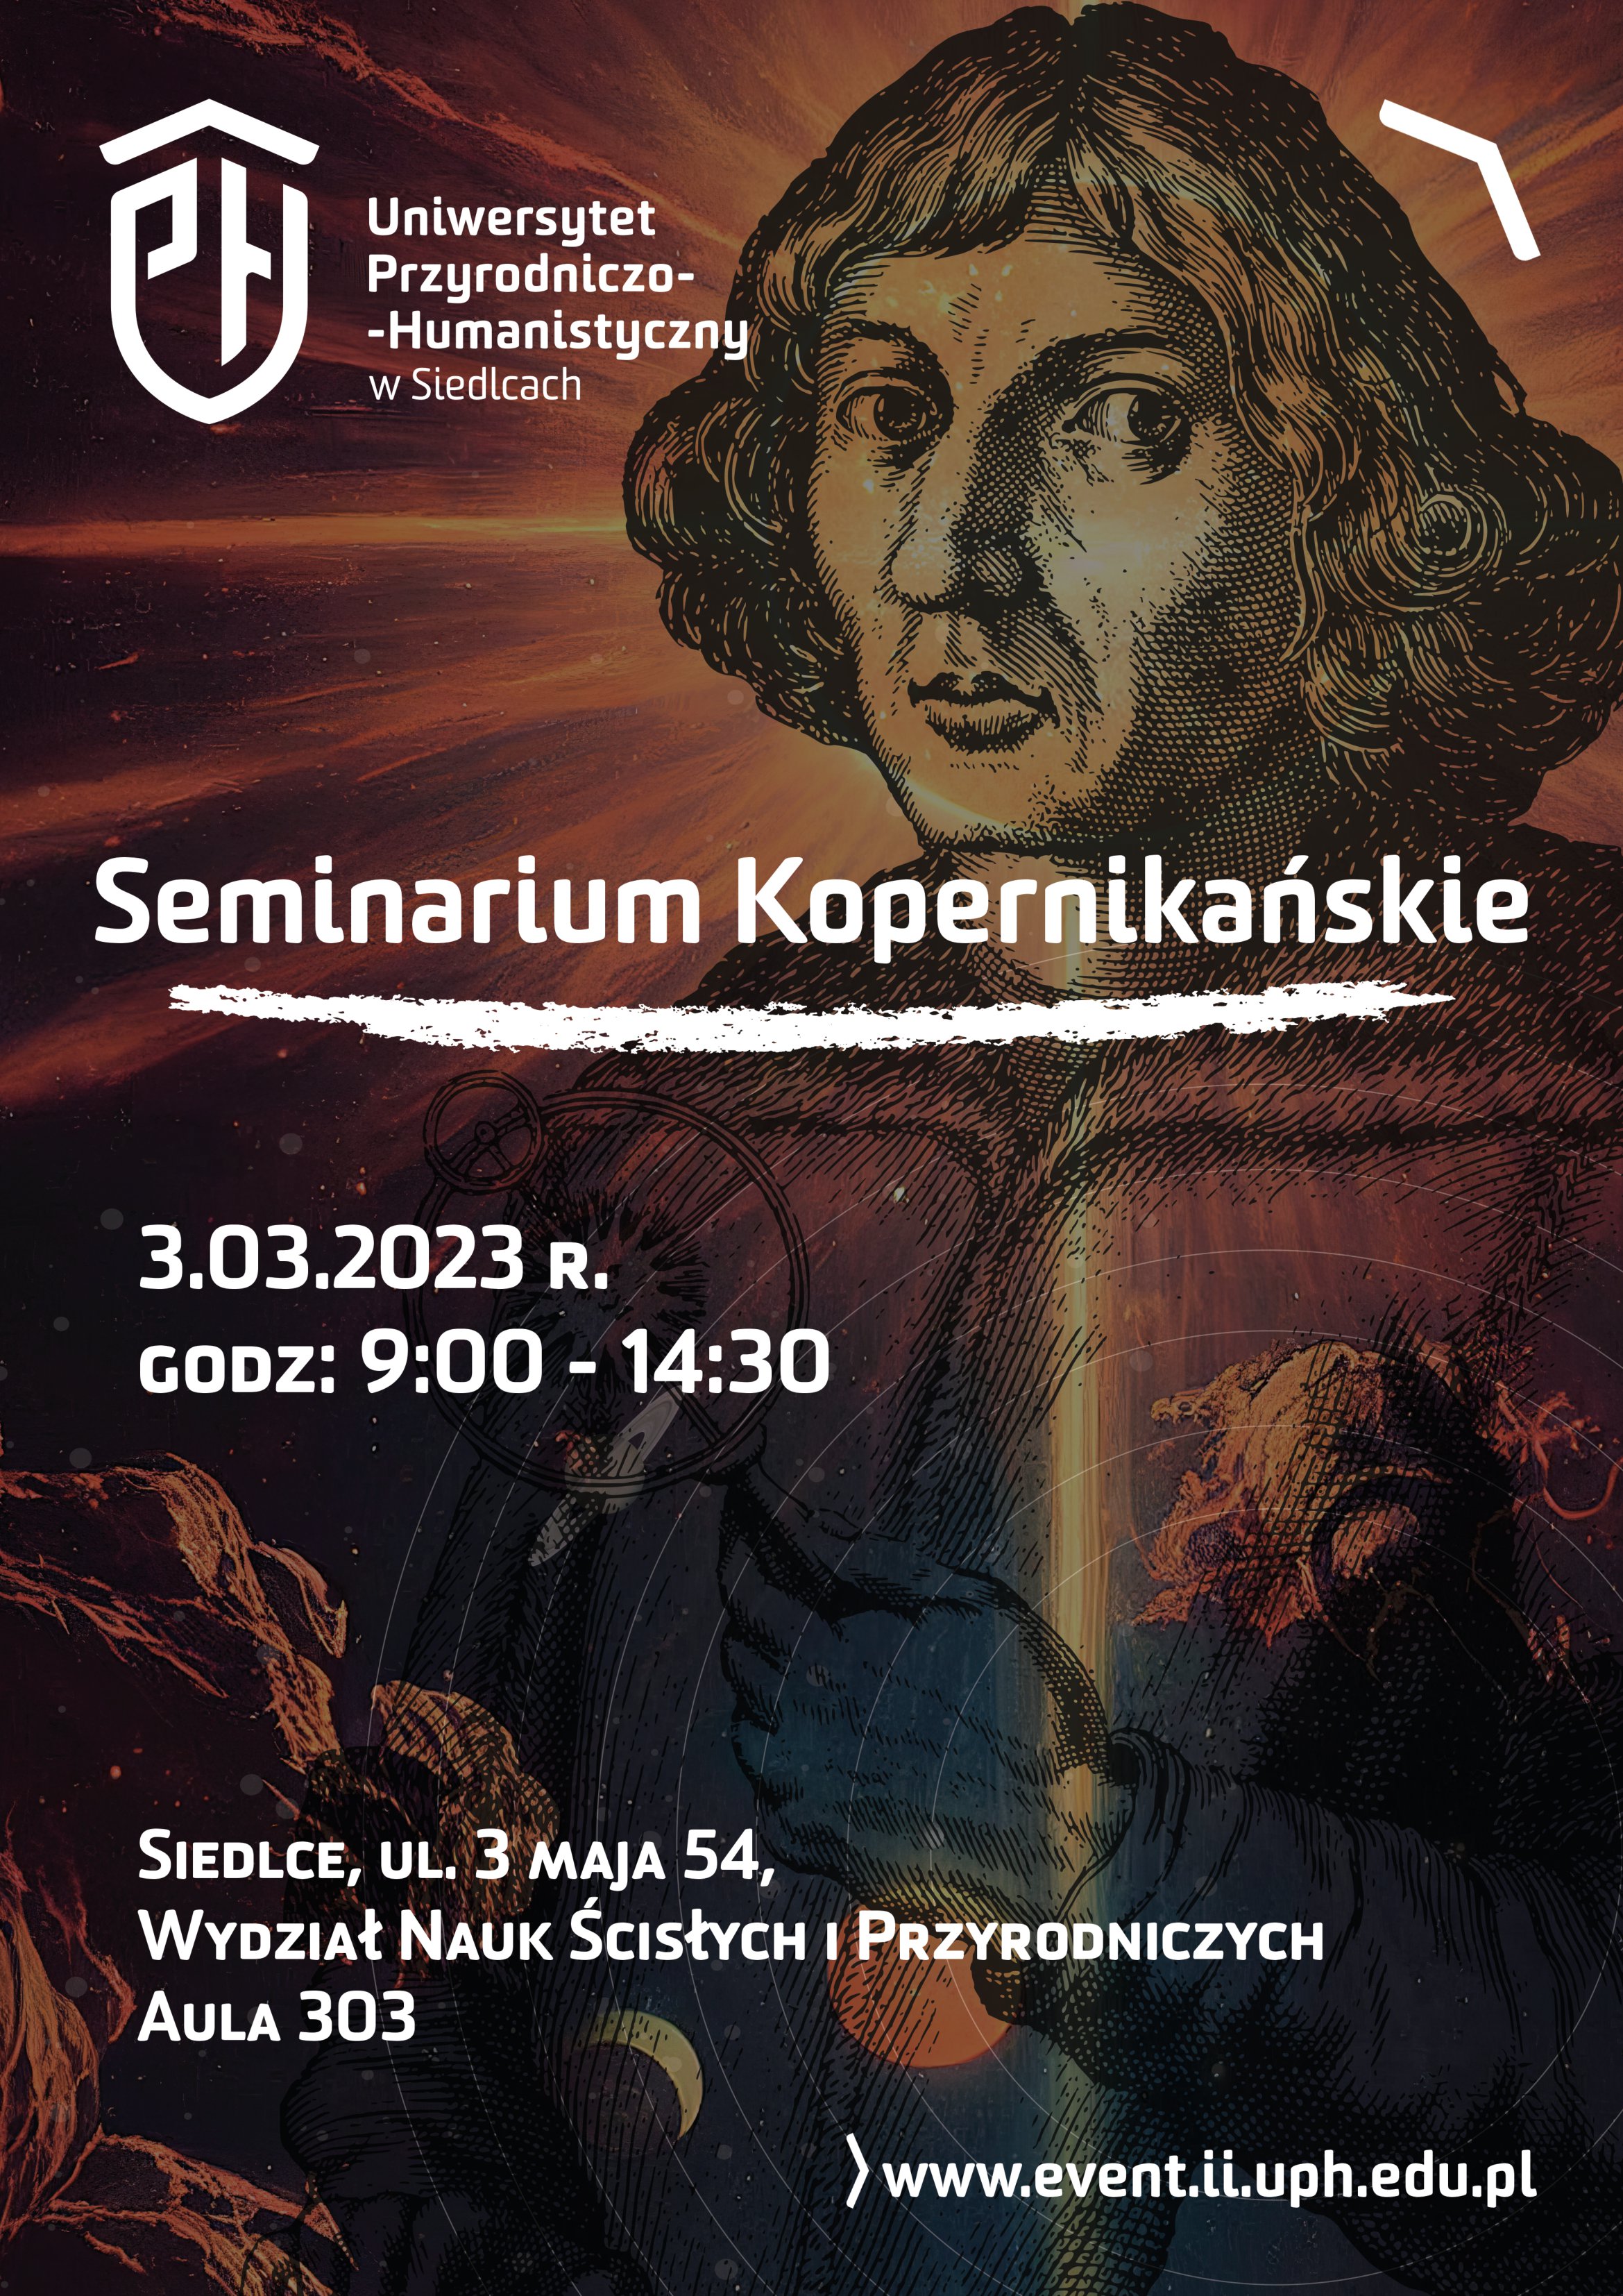 Seminarium Kopernikaskie, plakat